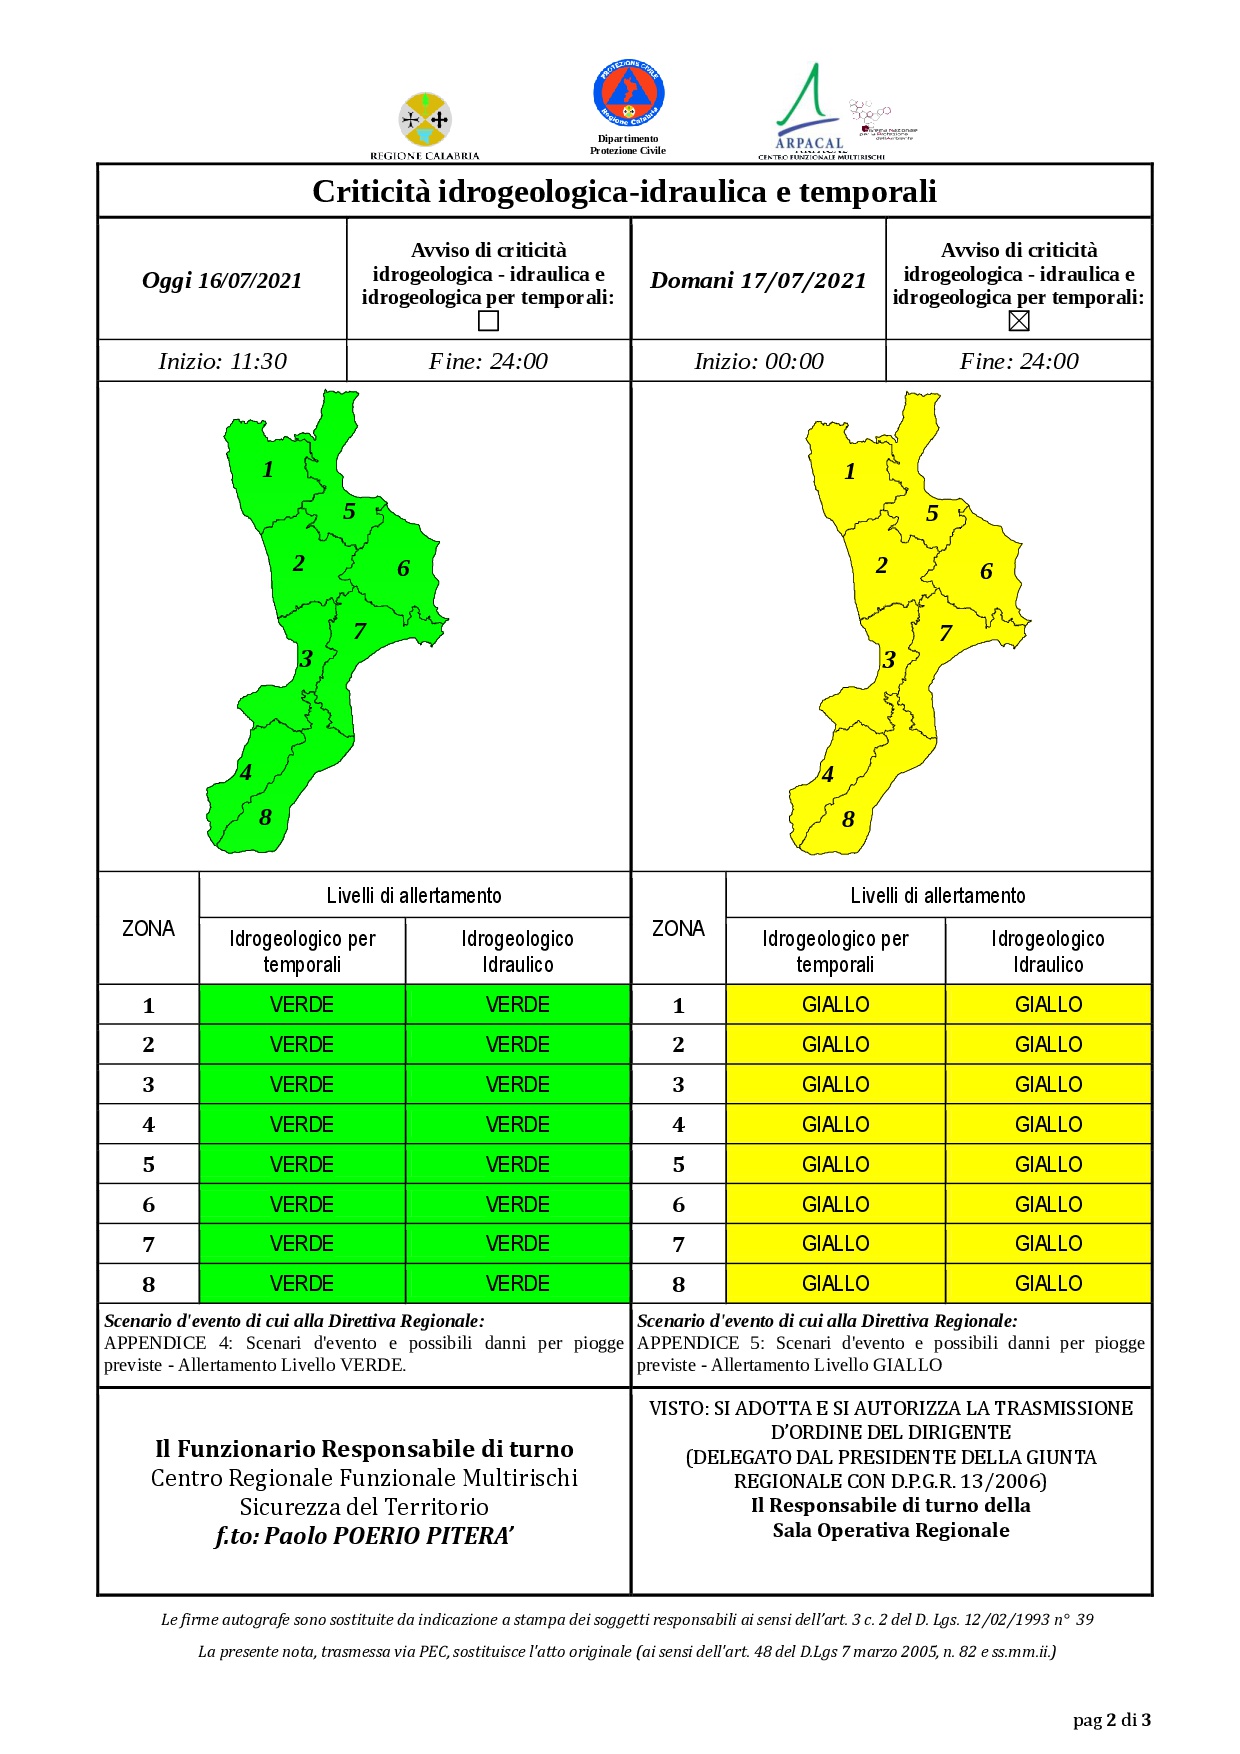 Criticità idrogeologica-idraulica e temporali in Calabria 16-07-2021